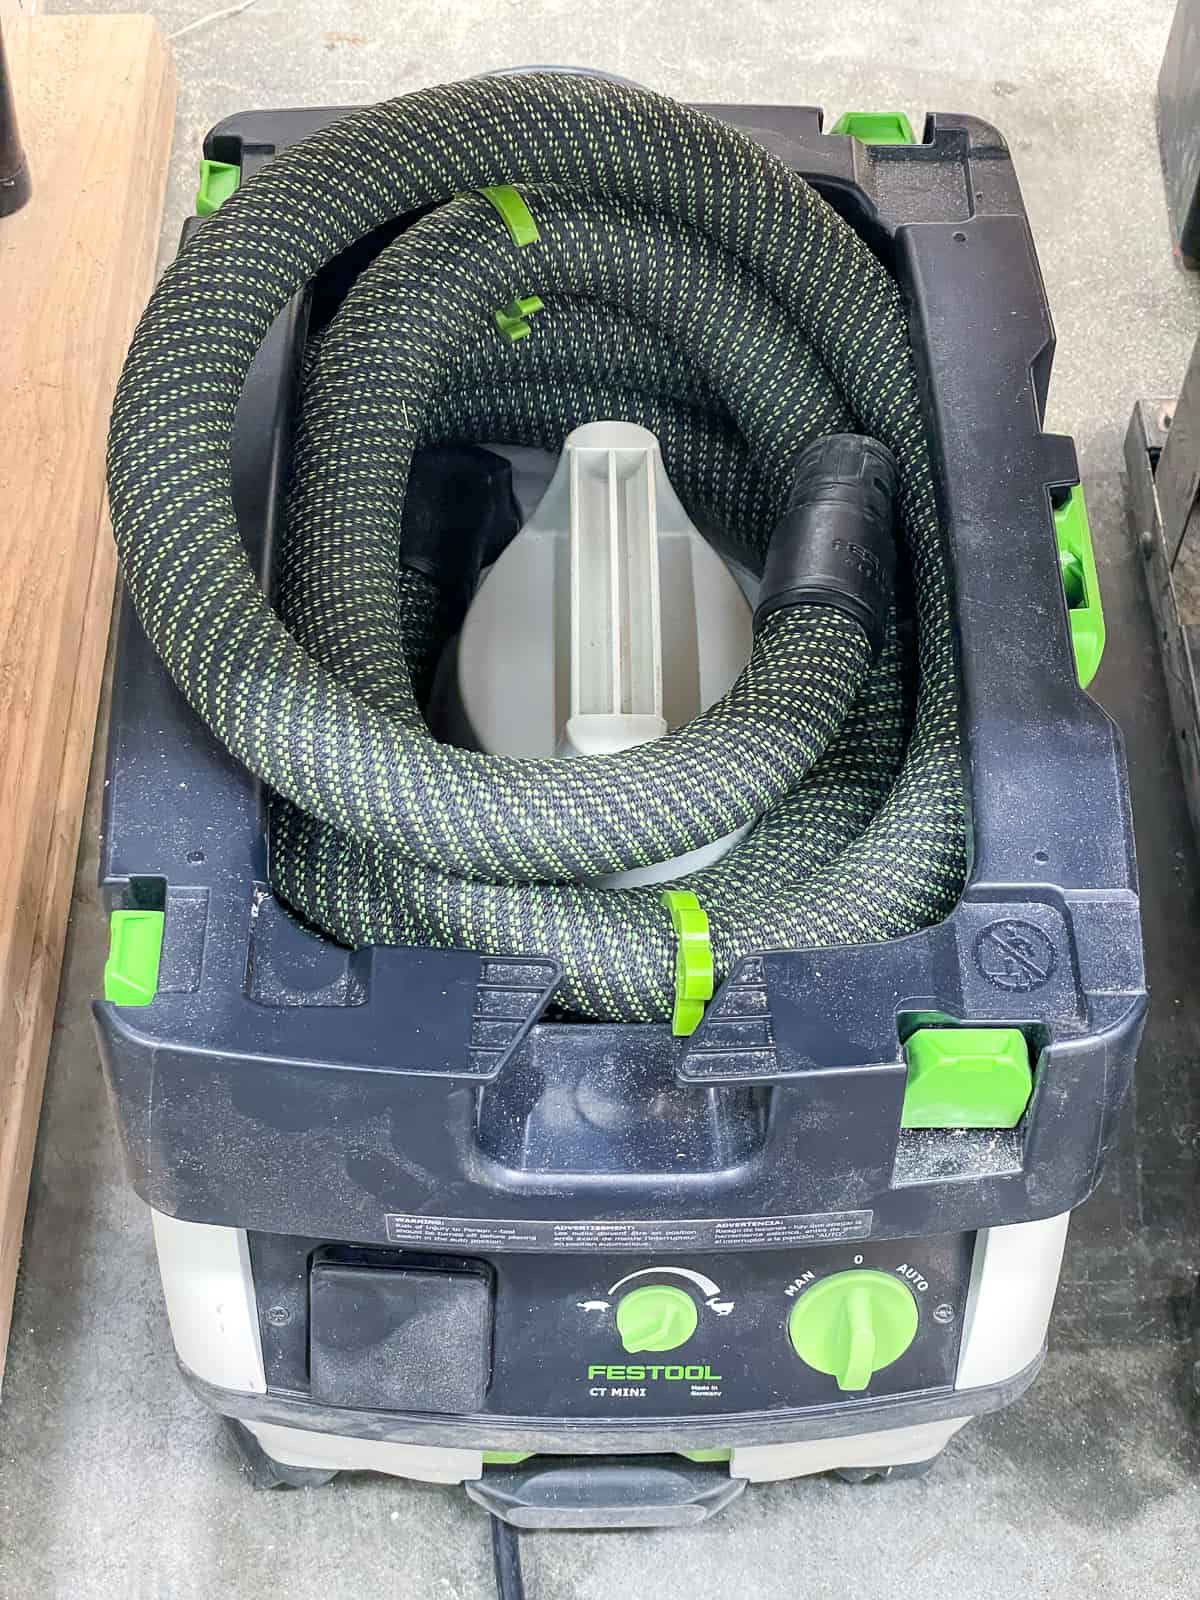 Festool dust extractor under workbench